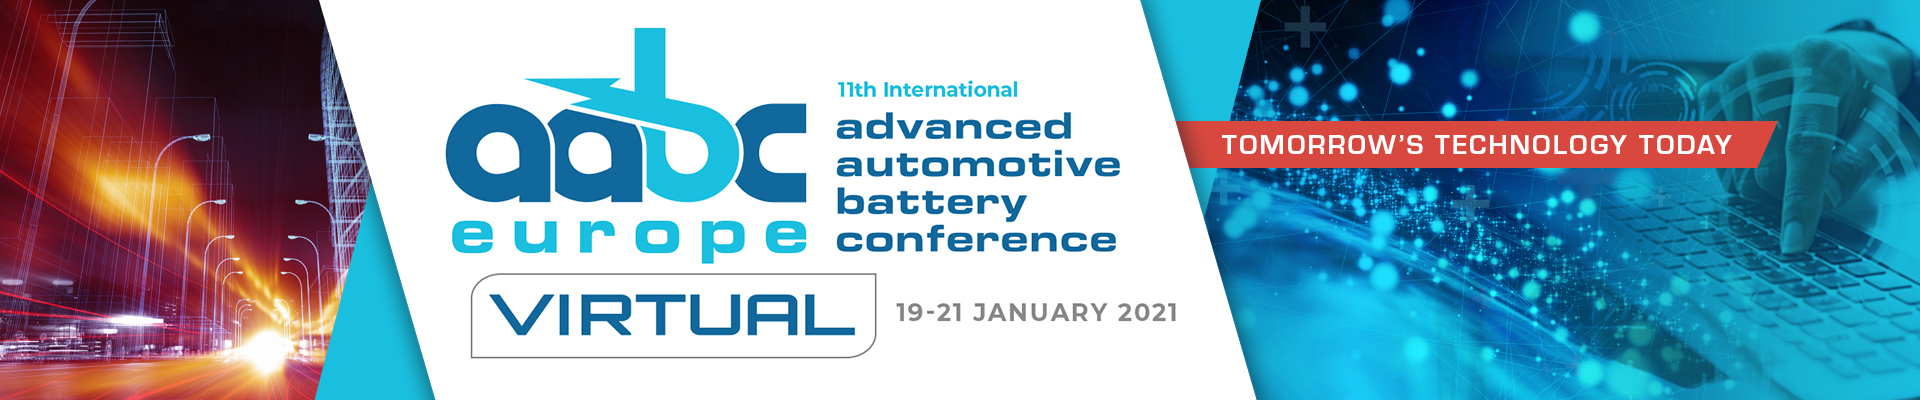 Advanced Automotive Batteries Europe Image Banner